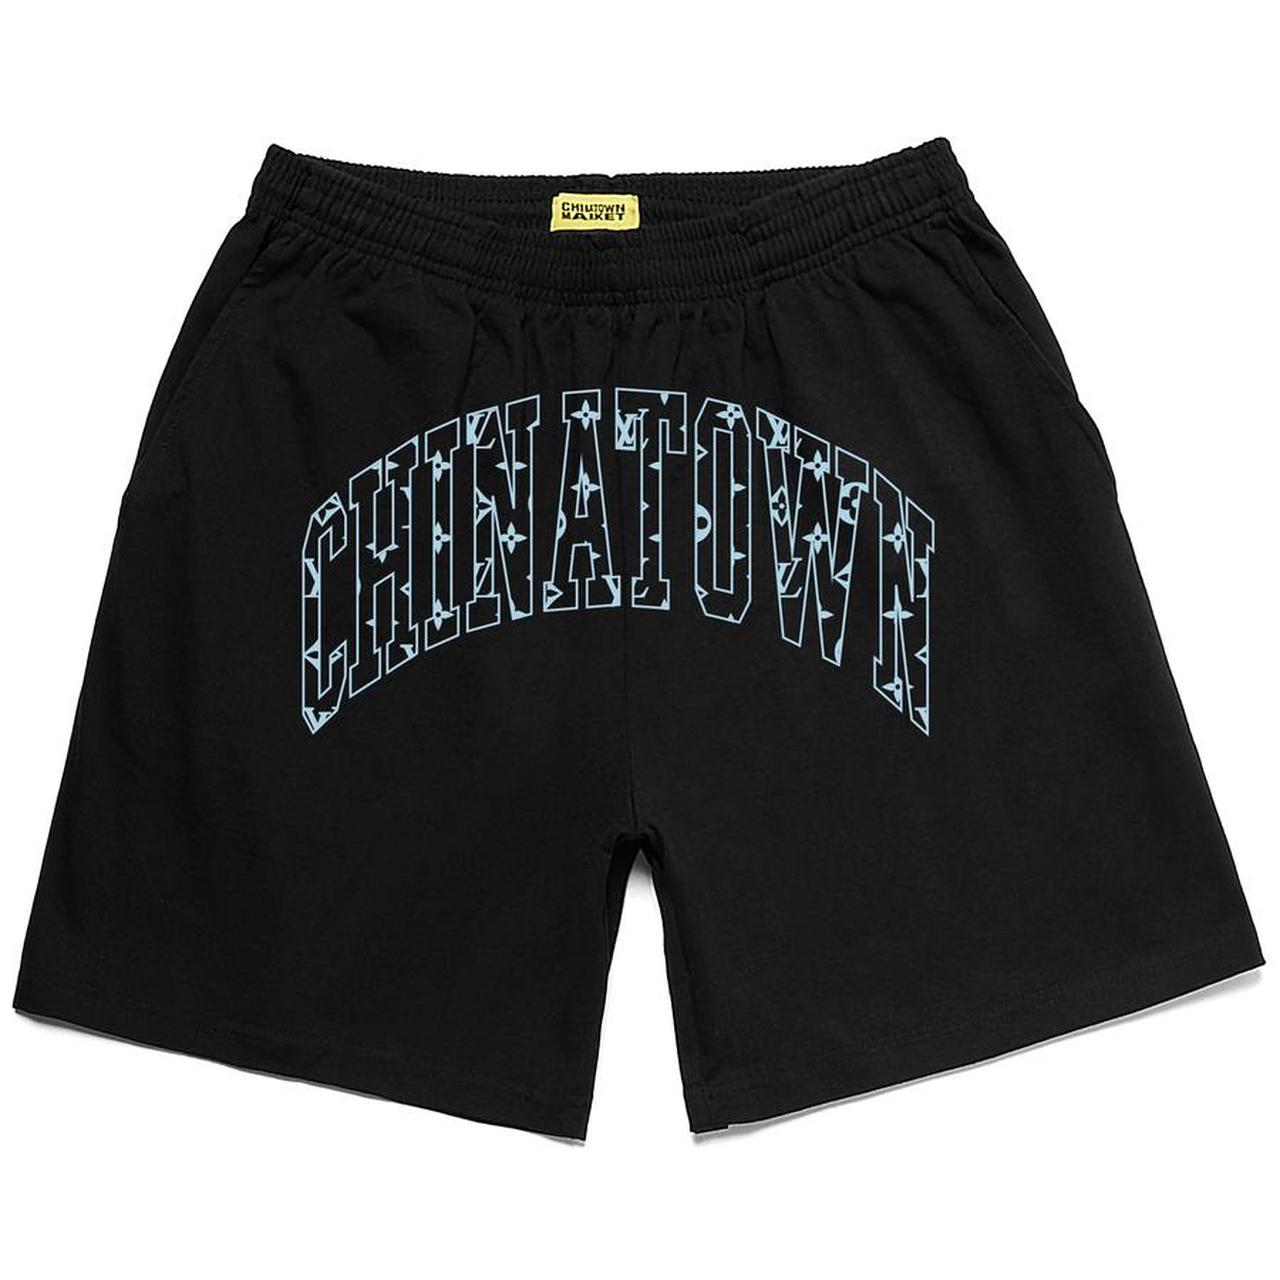 Lv swim shorts size M - Depop